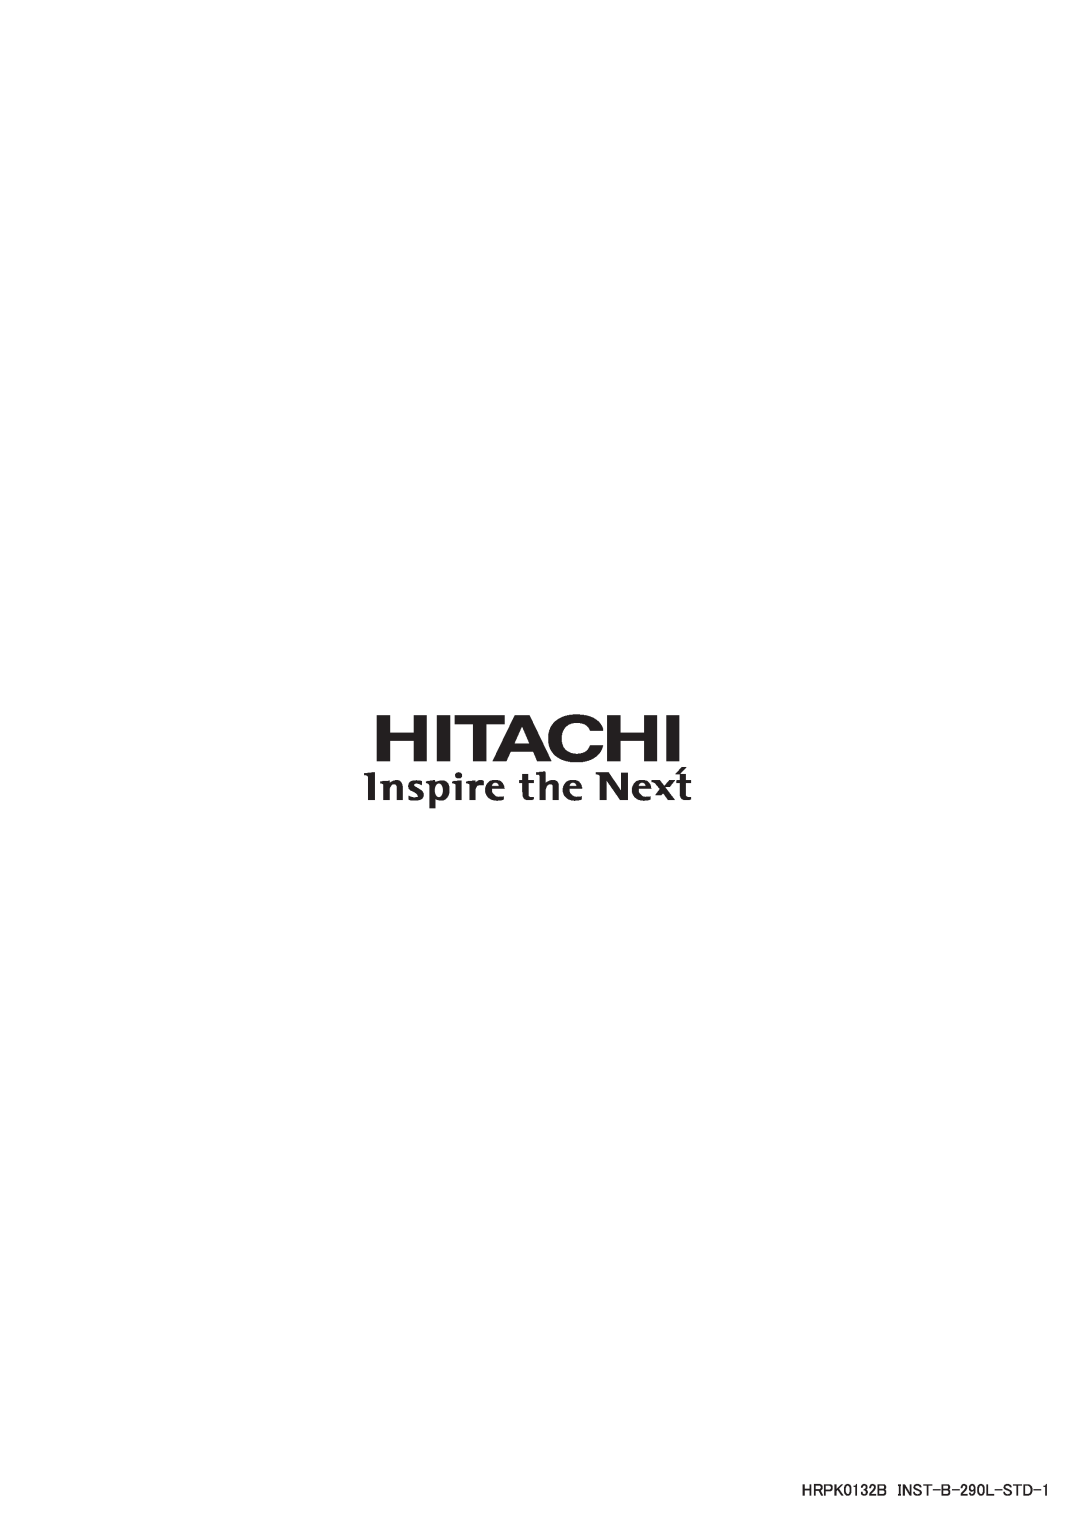 Hitachi refrigerator instruction manual 㪟㪩㪧㪢㪇㪈㪊㪉㪙㩷㩷㪠㪥㪪㪫㪄㪙㪄㪉㪐㪇㪣㪄㪪㪫㪛㪄㪈 